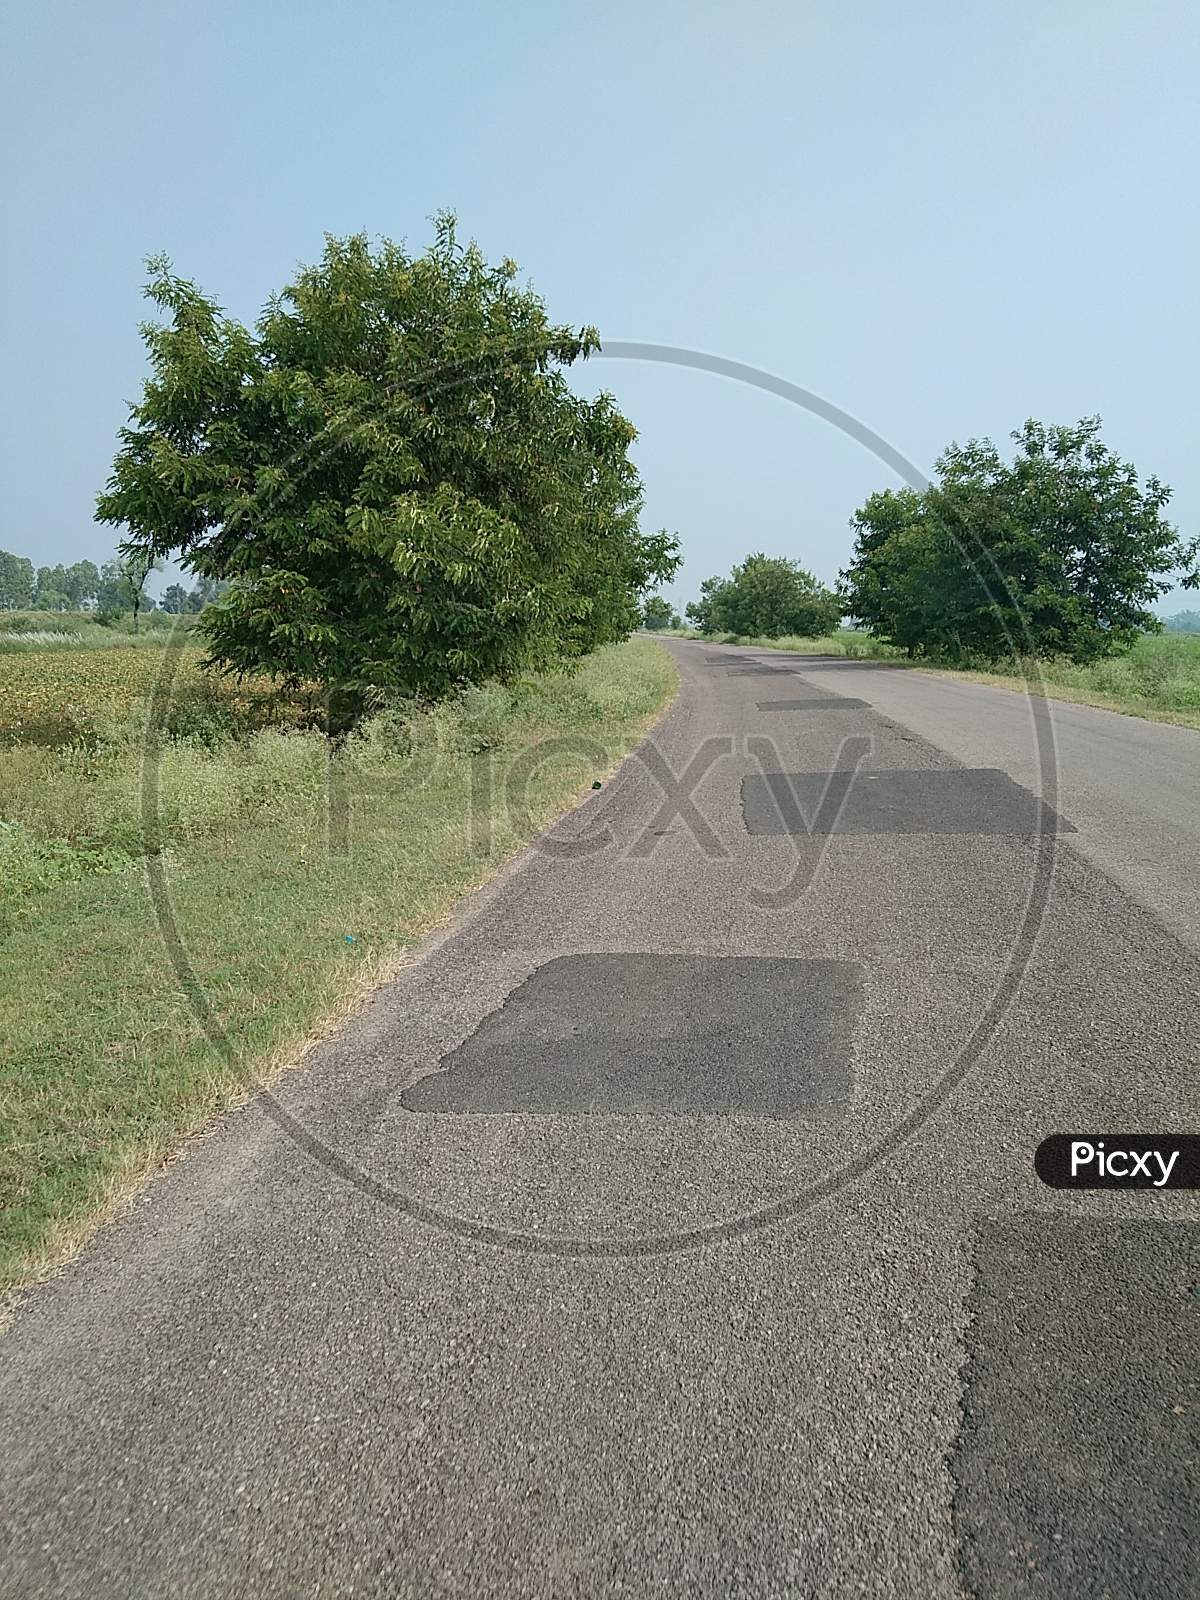 Road Surface Original Image